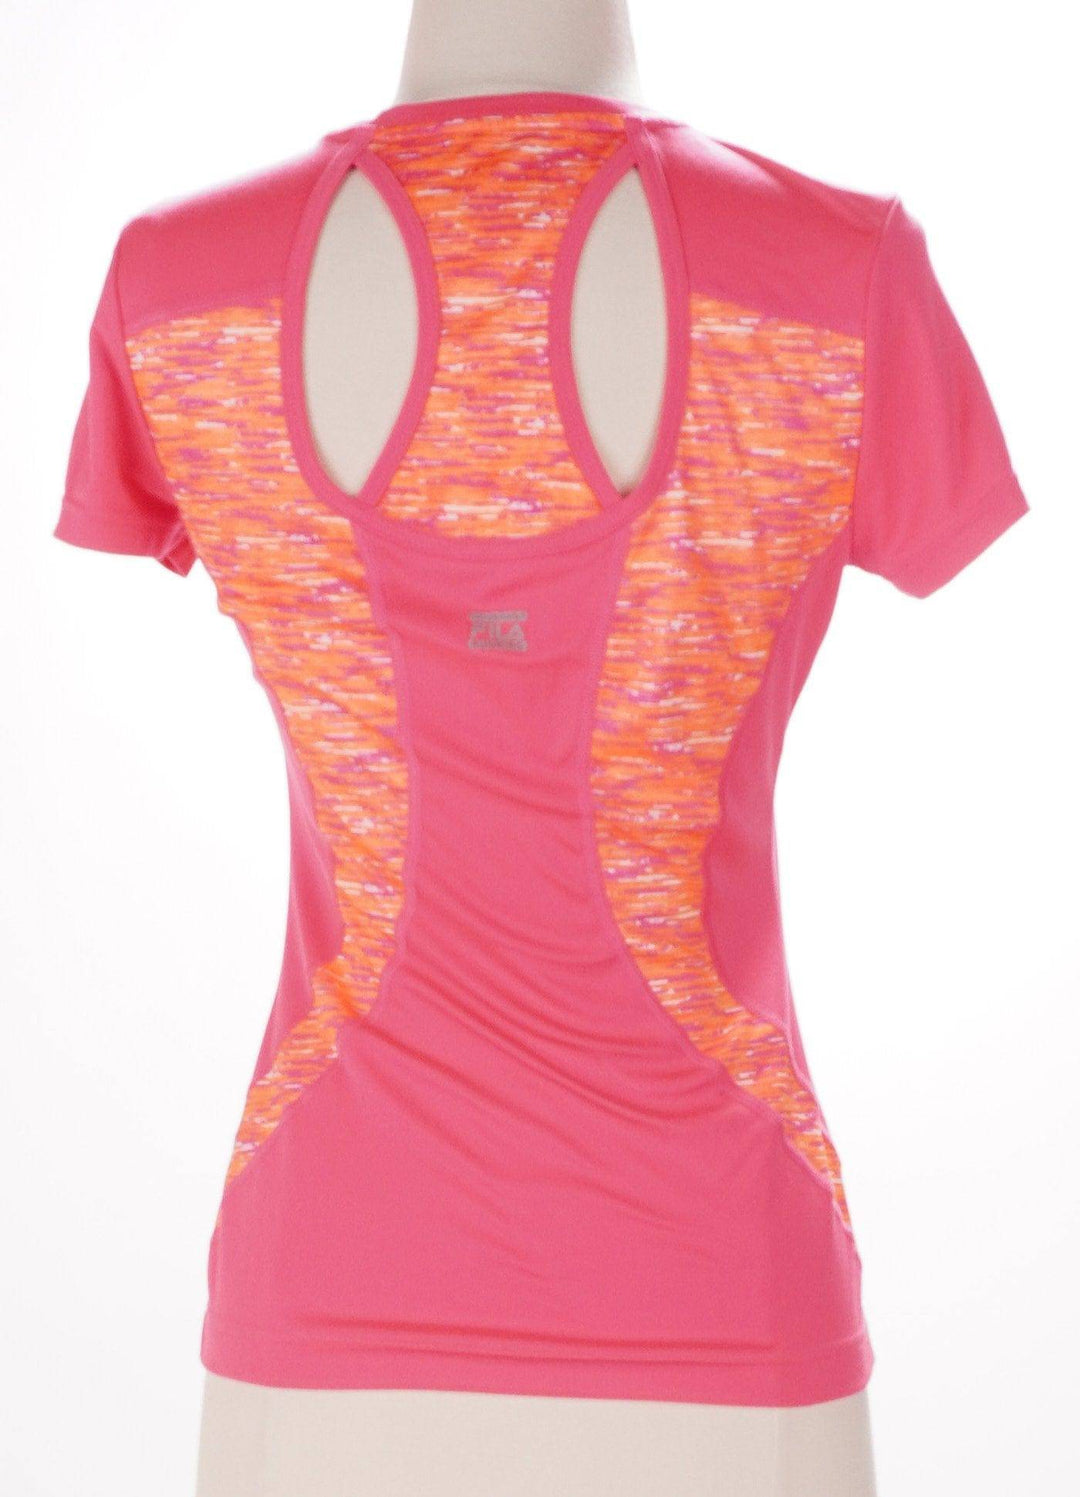 Skorzie X-Small / Pink / Consigned Fila Short Sleeve Golf Shirt - Pink-Orange - X-Small